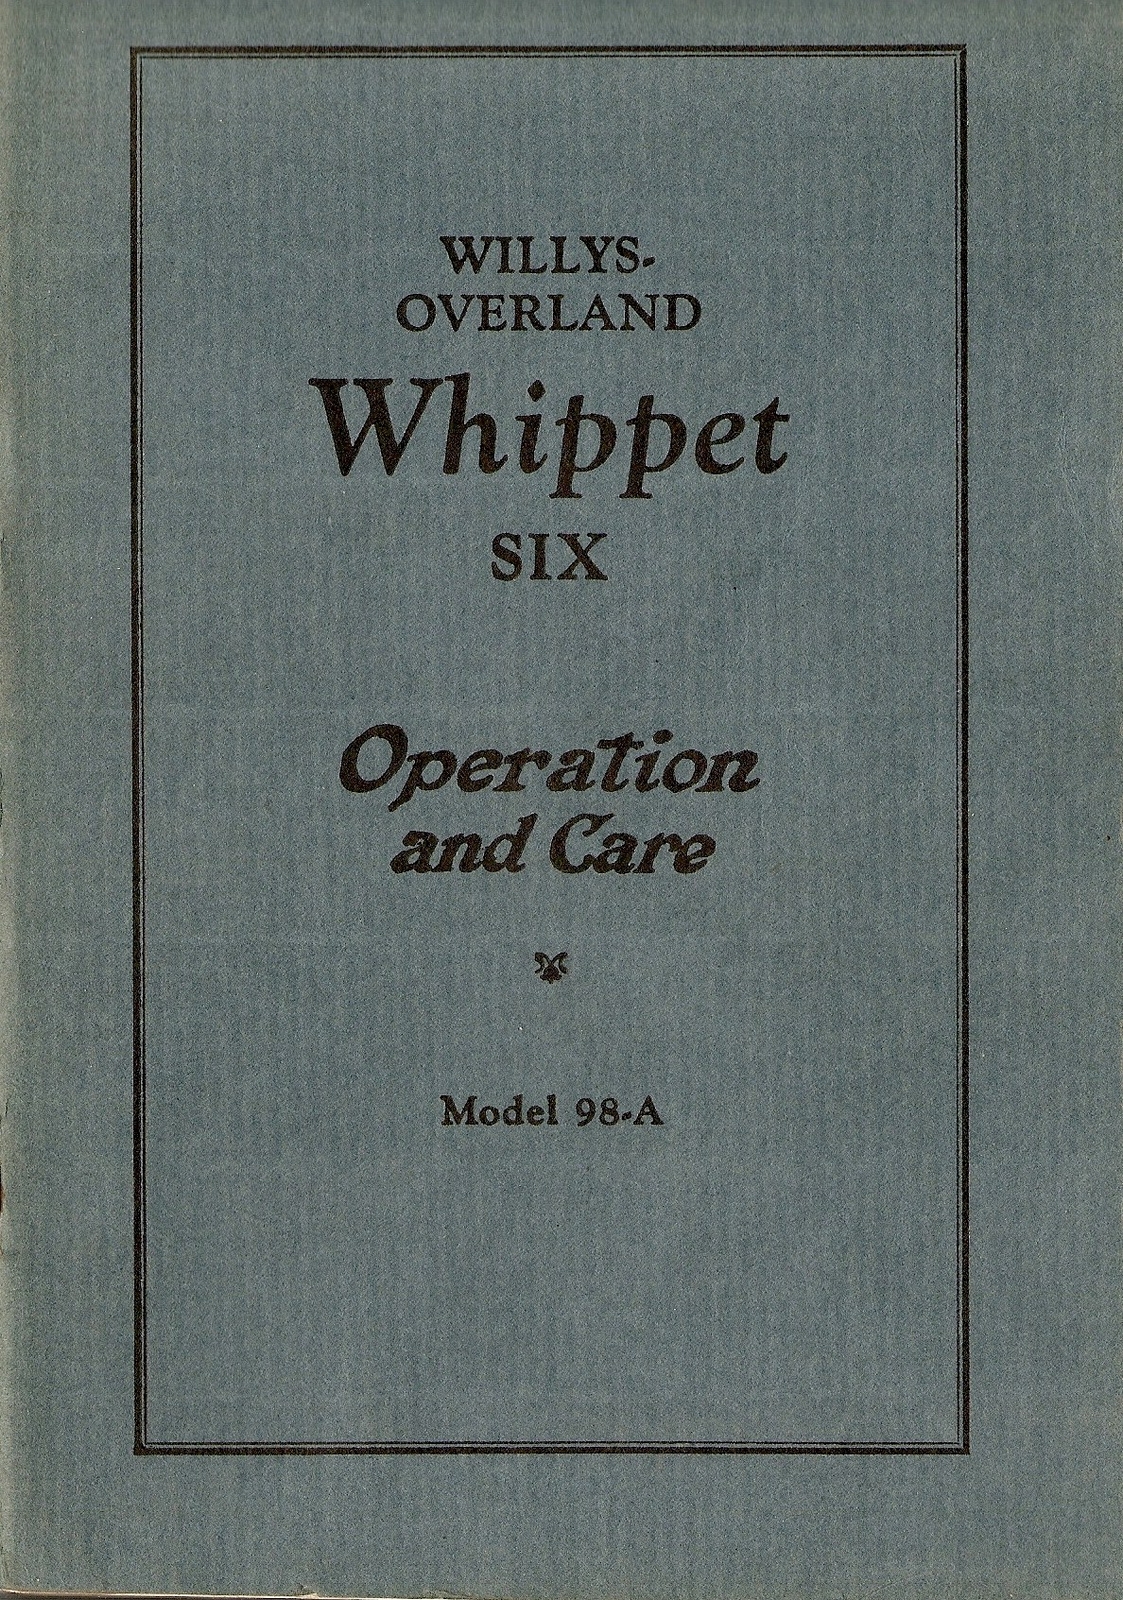 n_1929 Whippet Six Operation Manual-00.jpg